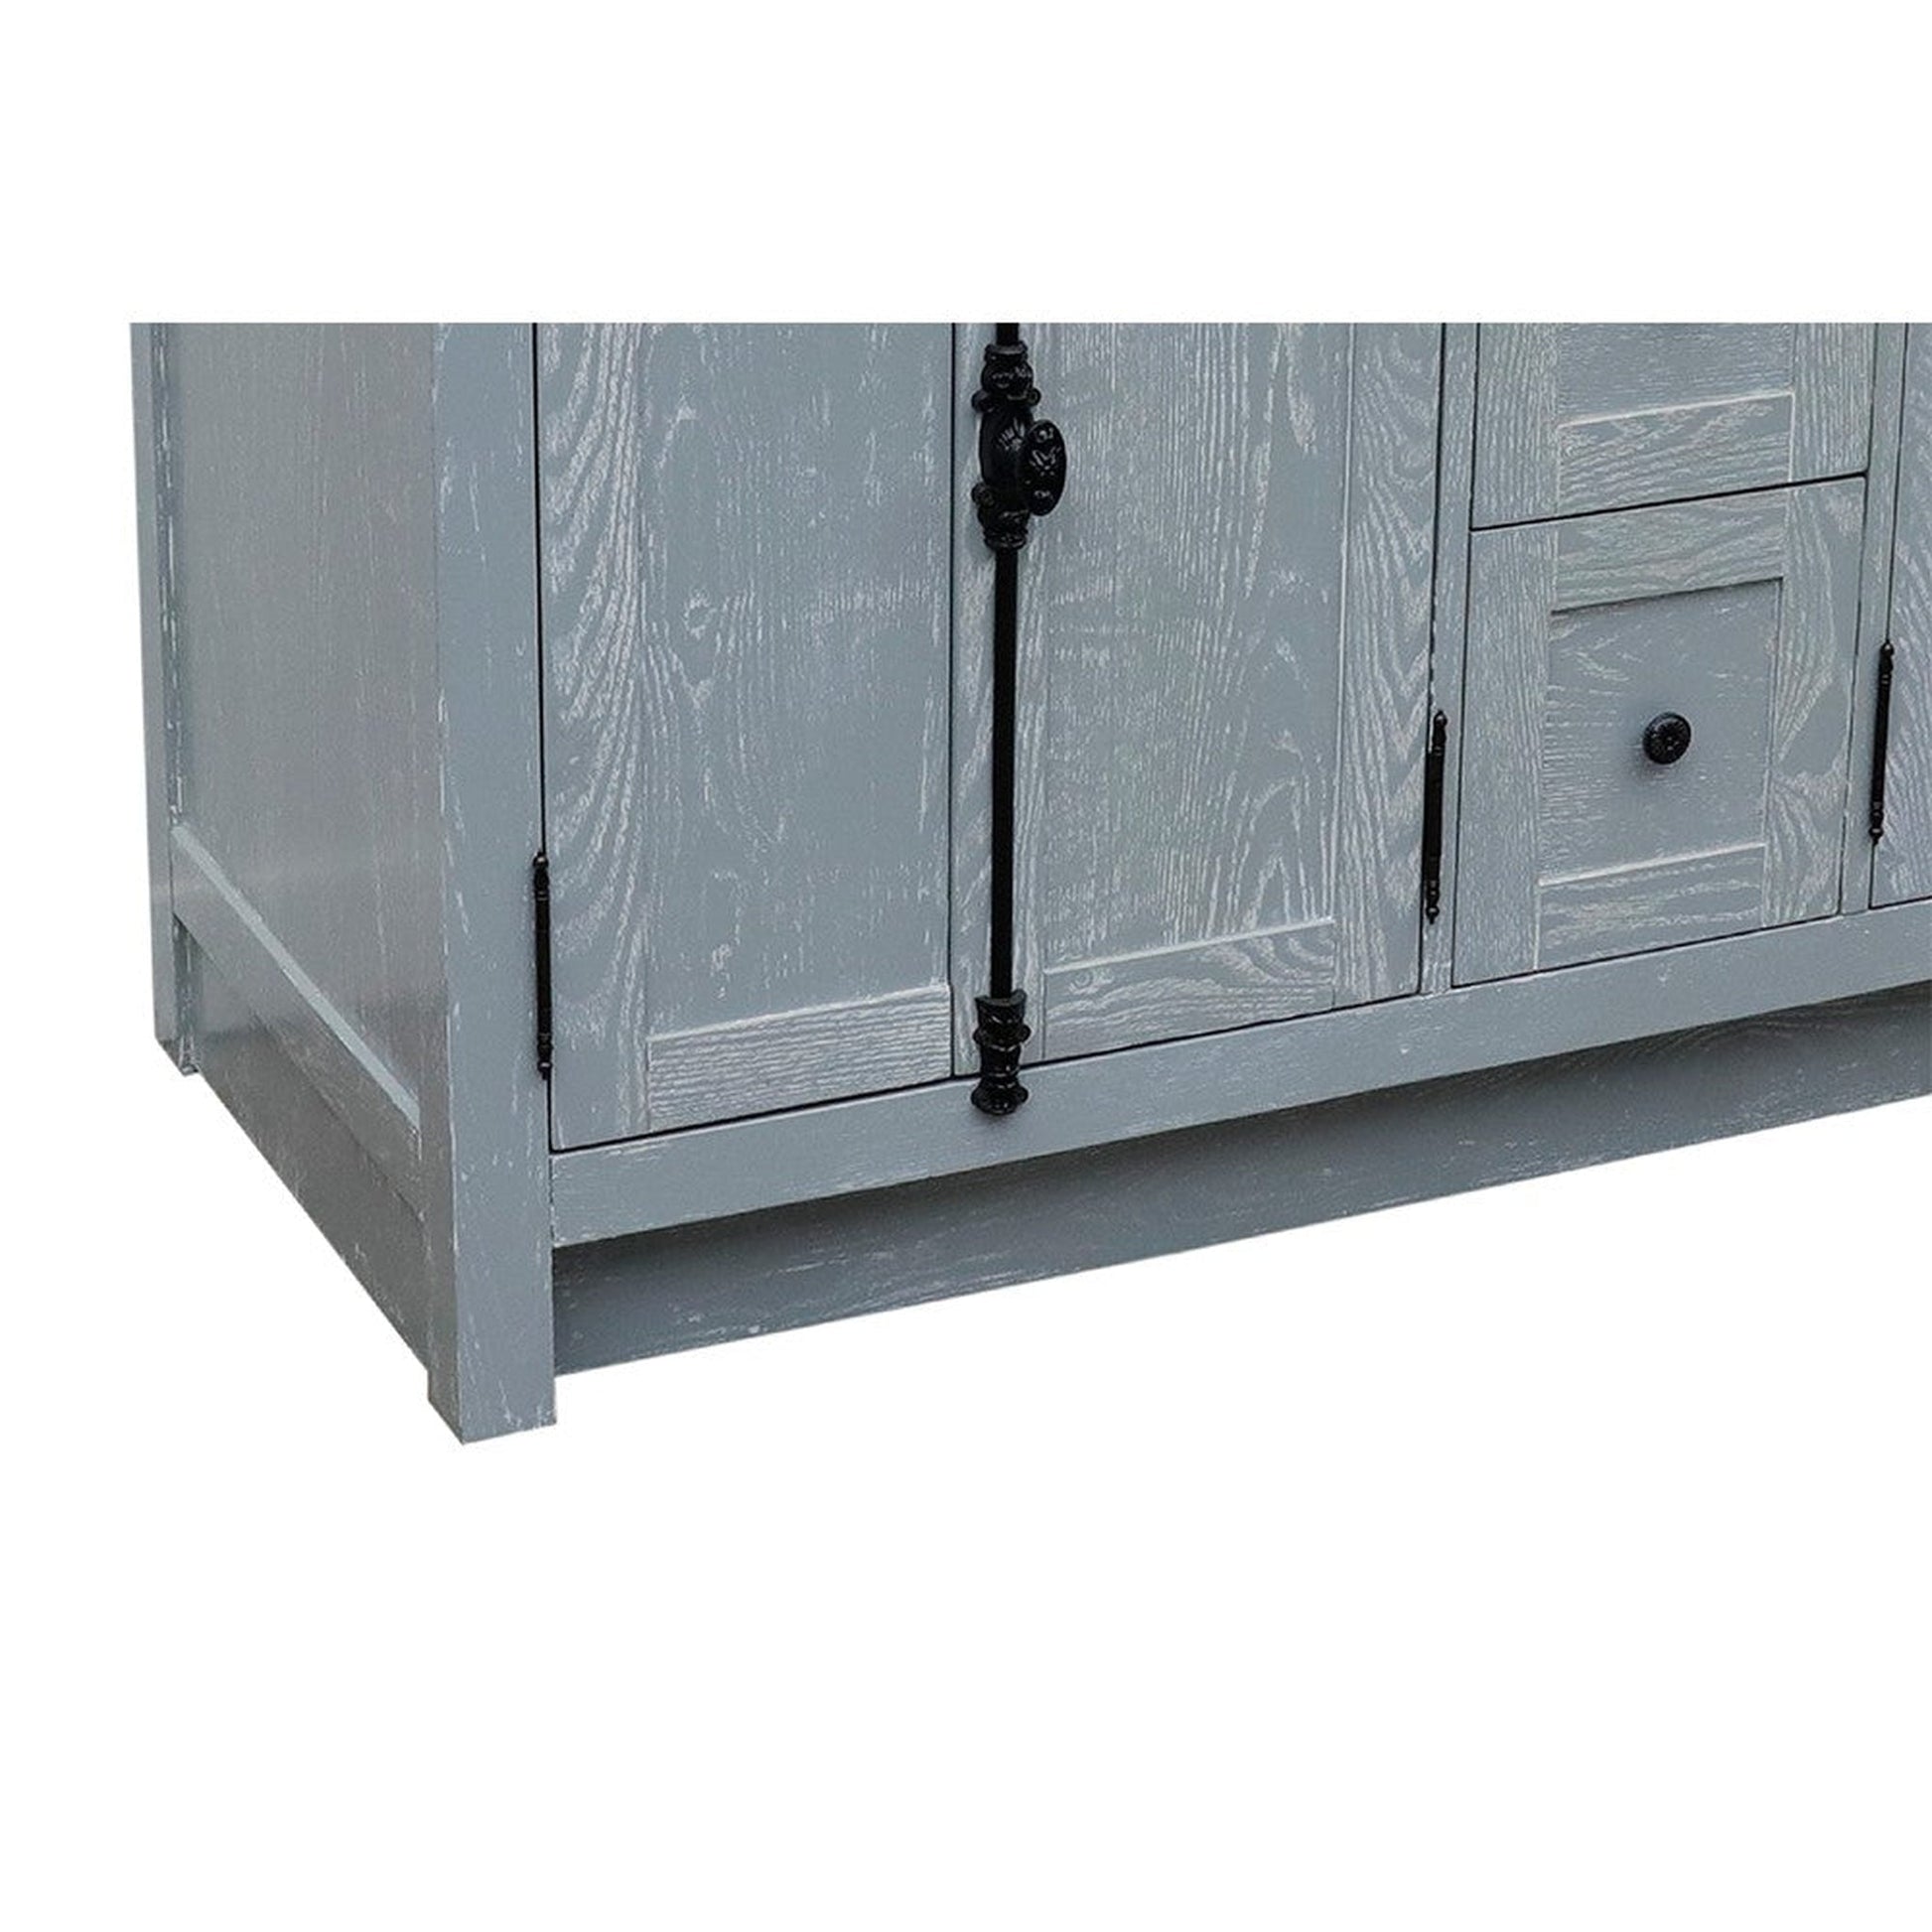 Bellaterra Home Plantation 55" 4-Door 3-Drawer Gray Ash Freestanding Vanity Set With Ceramic Double Undermount Rectangular Sink and Gray Granite Top